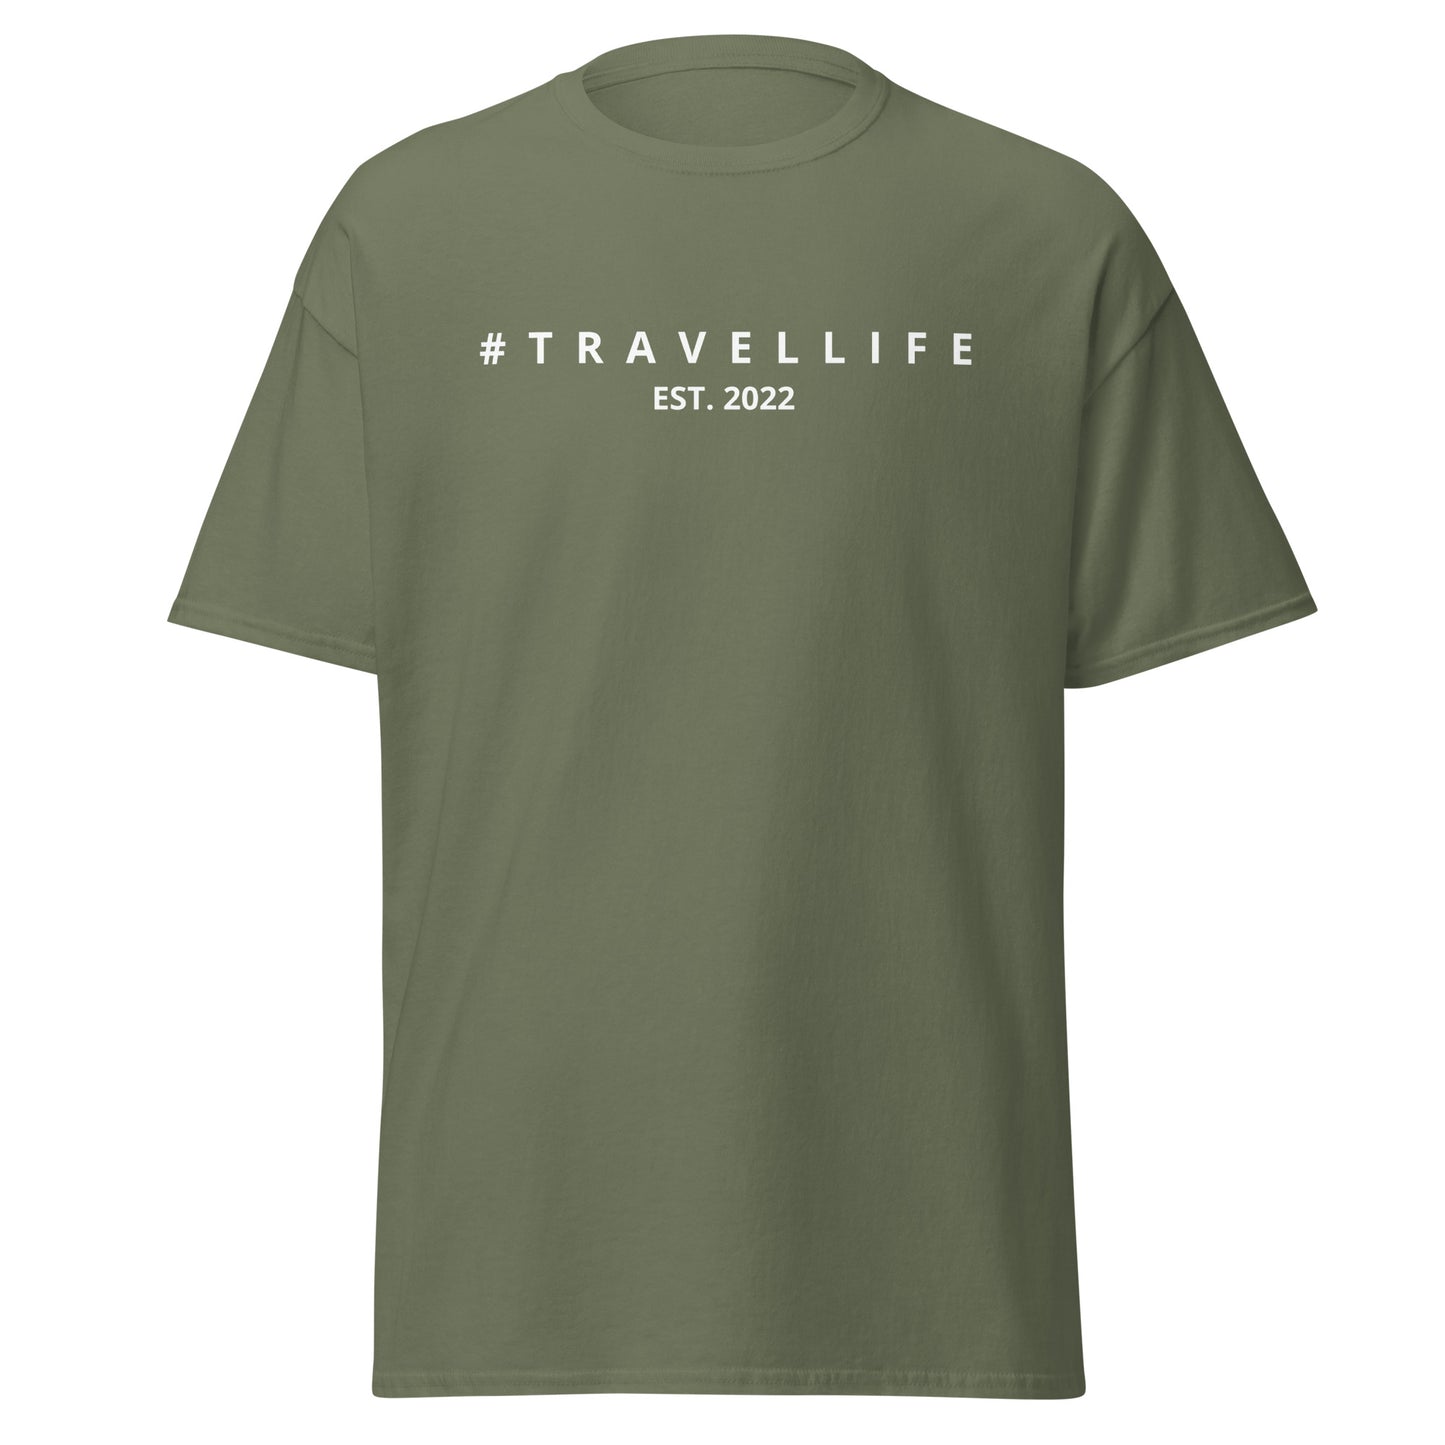 #Travellife Est. 2022 Men's Classic Tee White Text